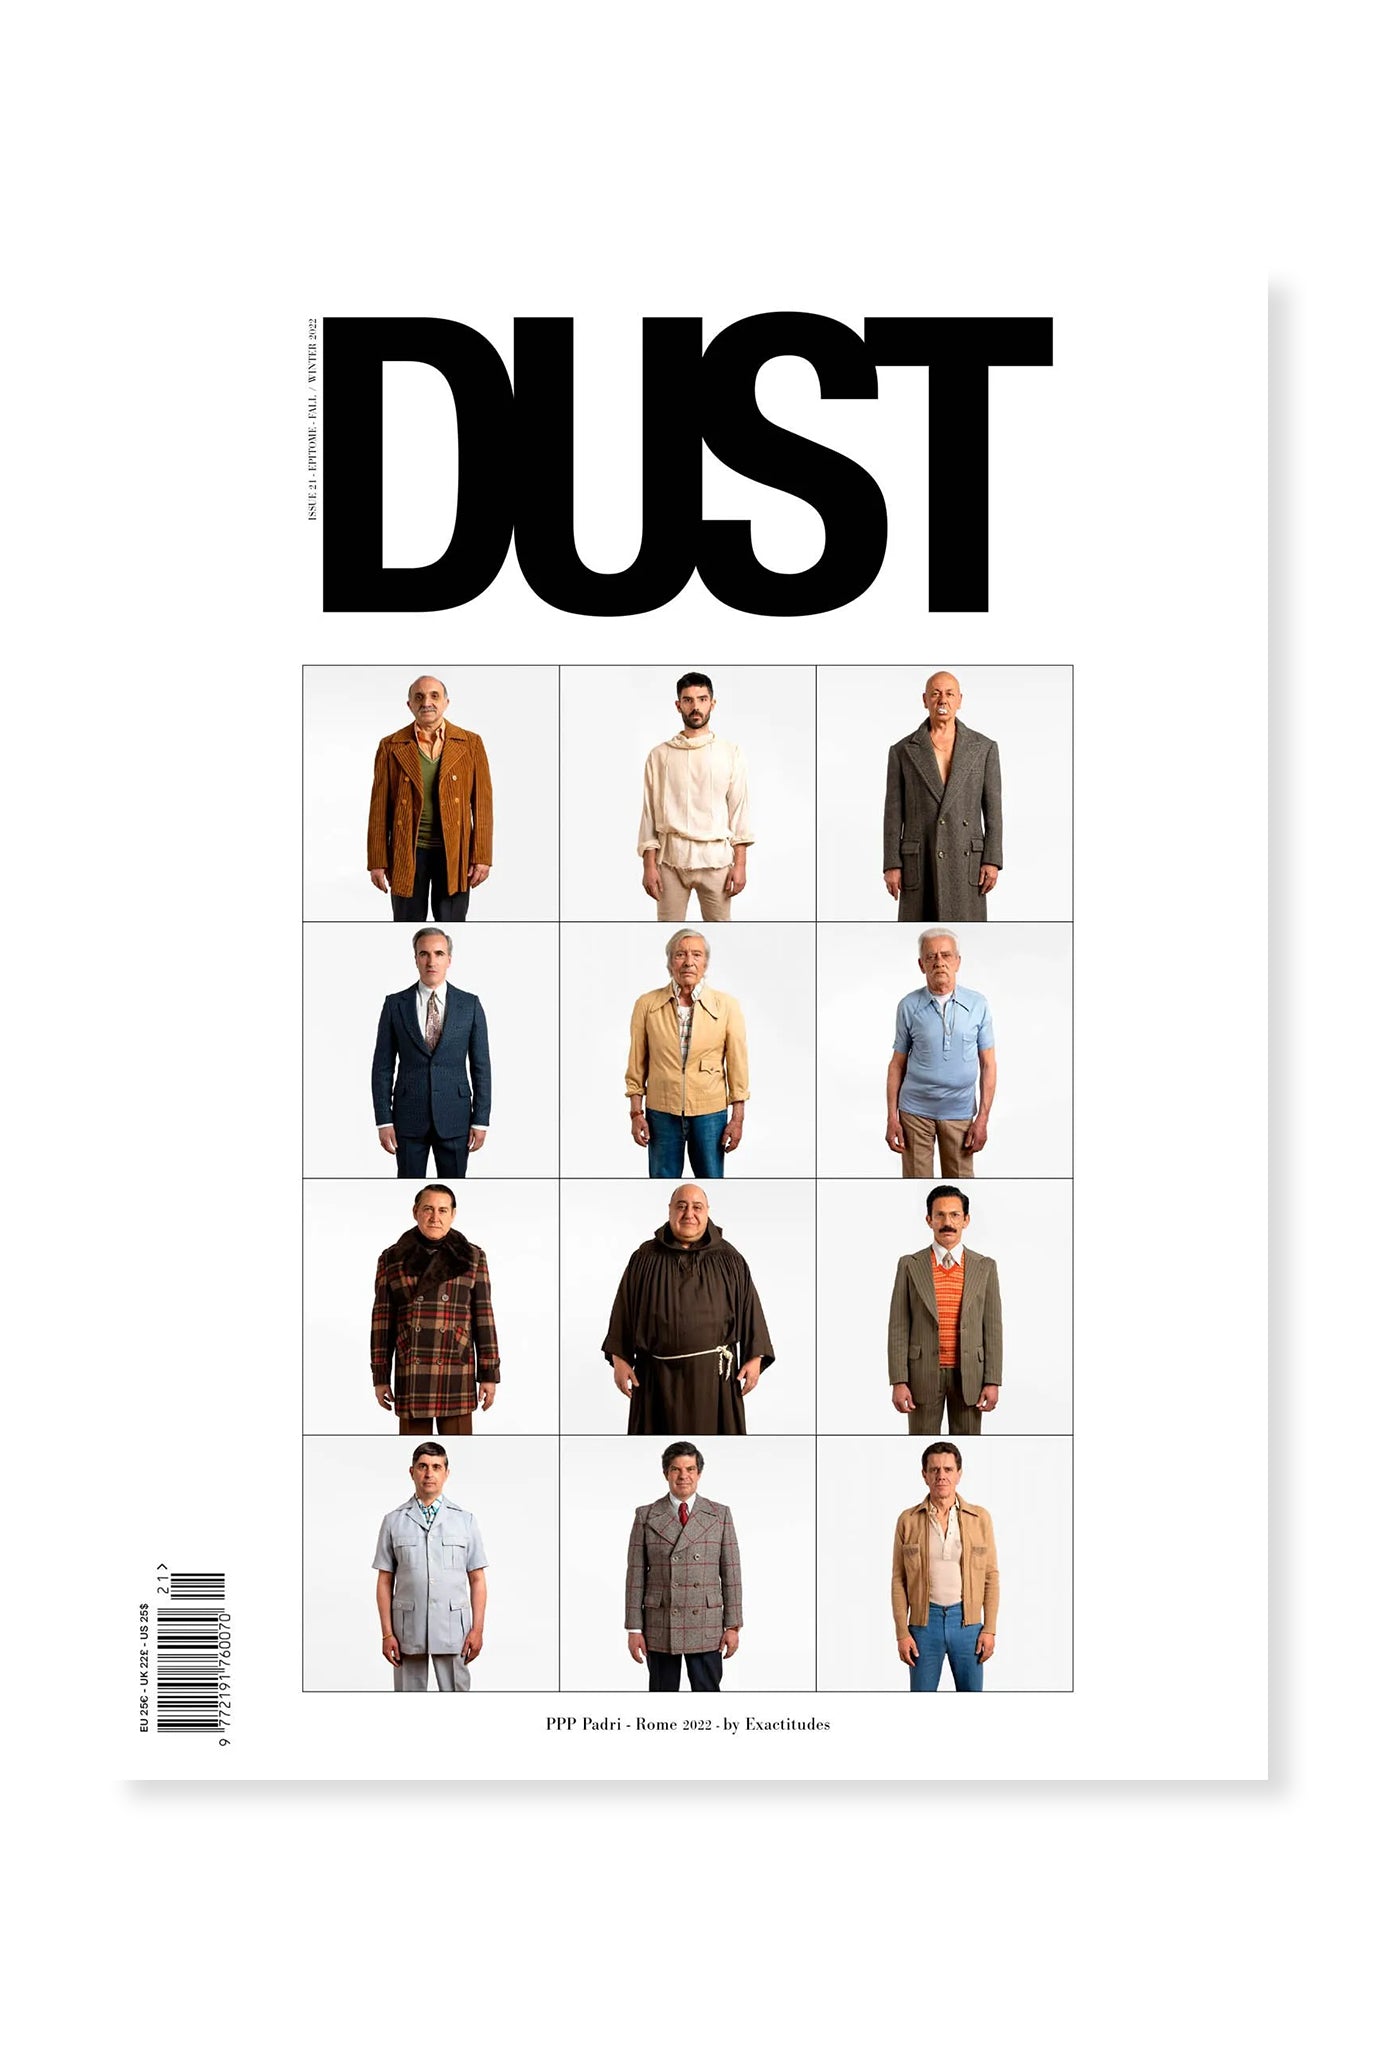 DUST Magazine, Issue 21